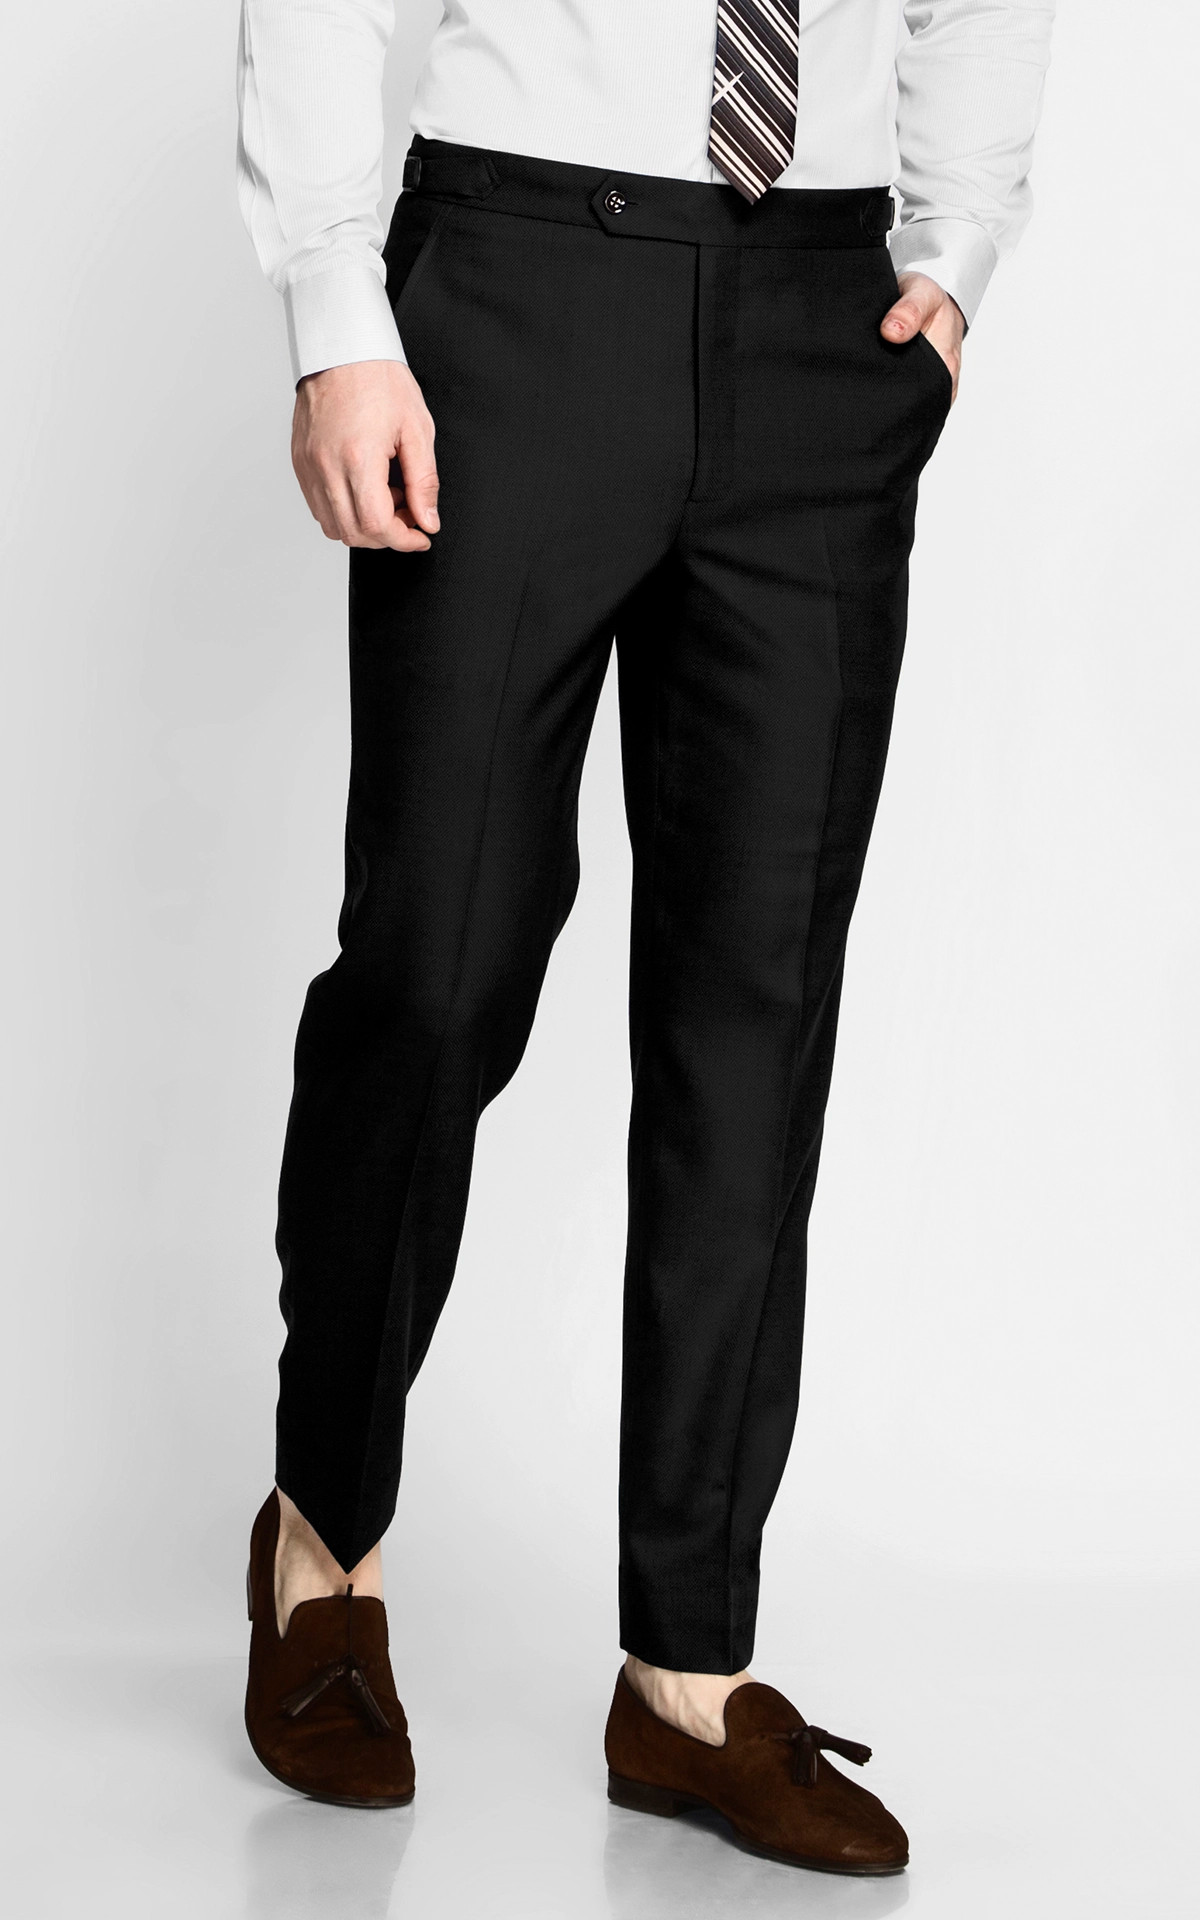 Buy Men Black Solid Slim Fit Formal Trousers Online - 760107 | Peter England